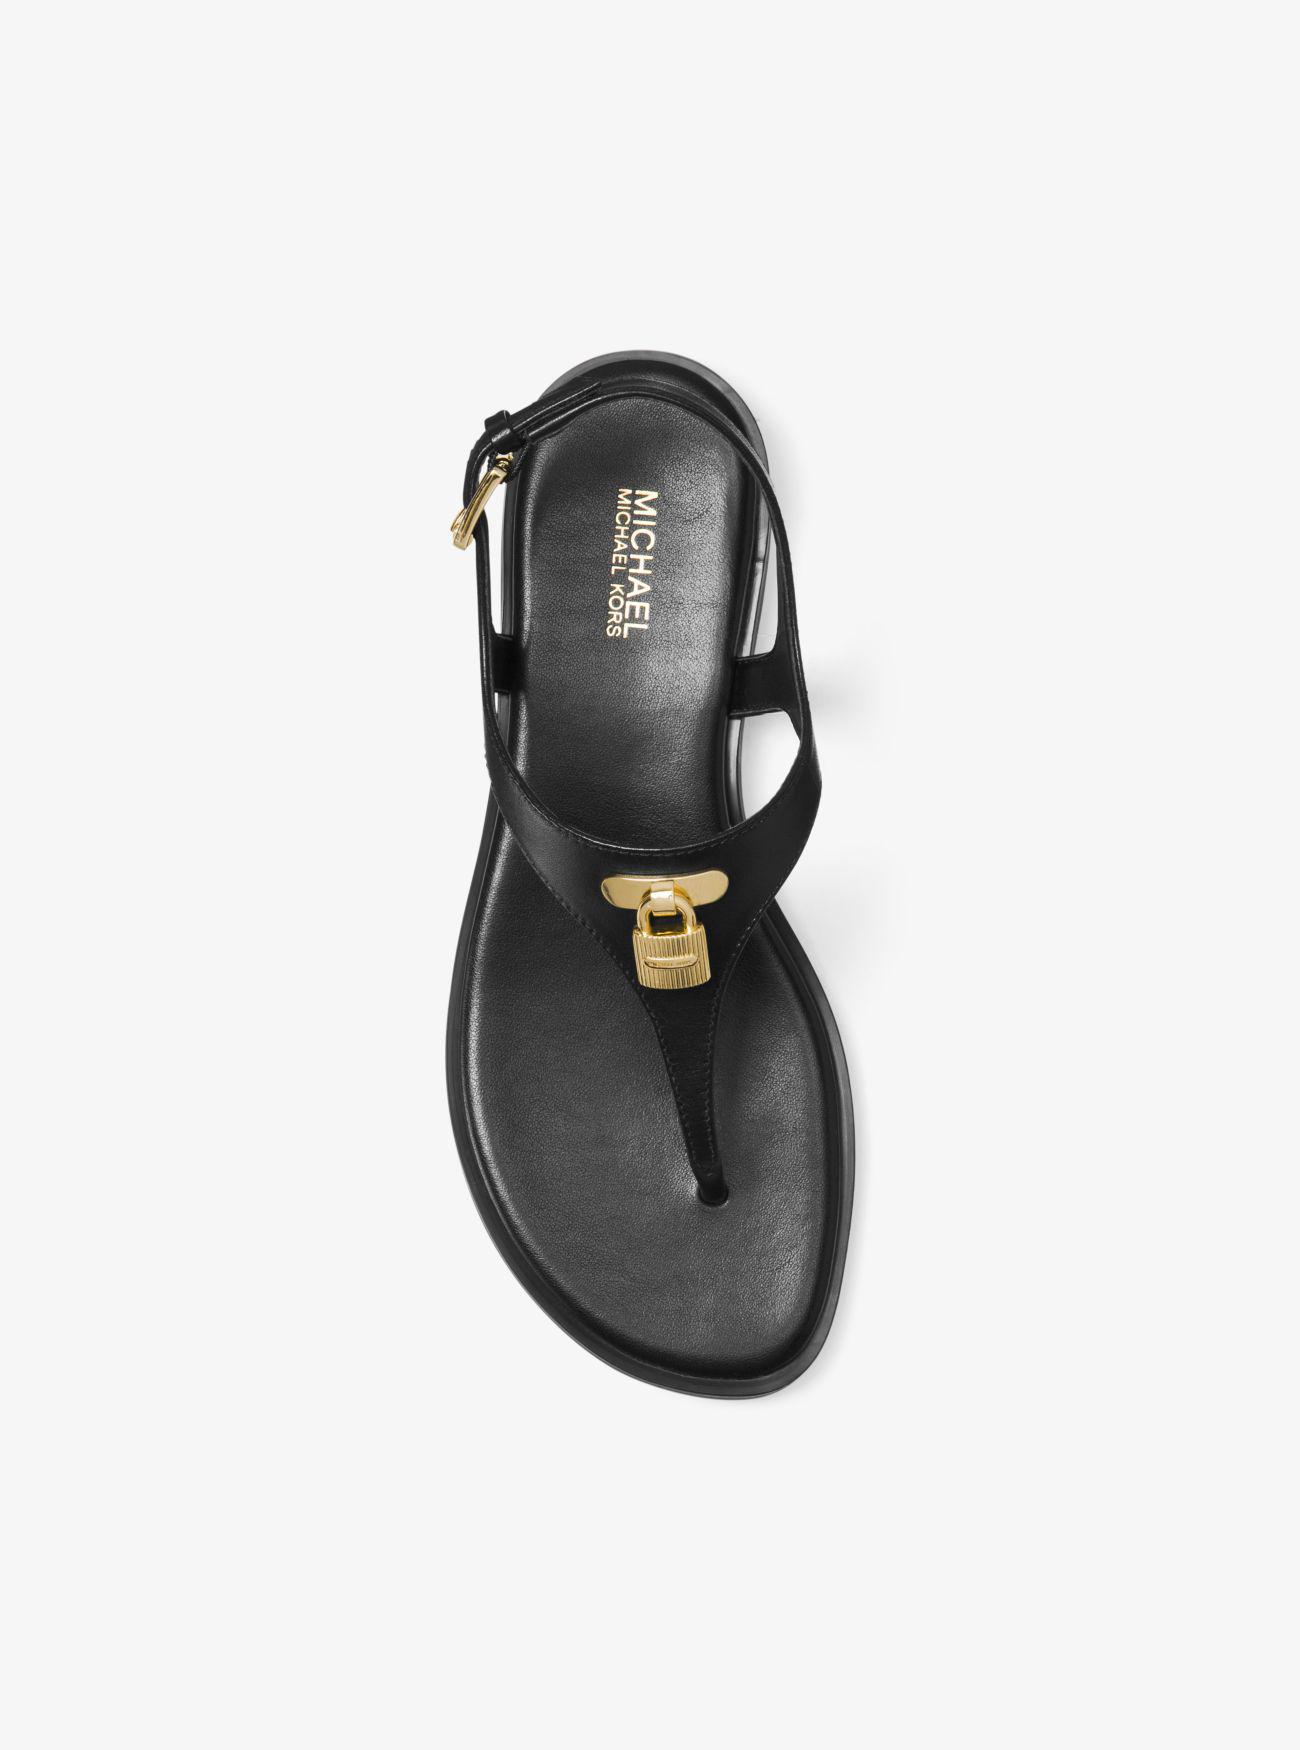 Michael Kors Mira Leather Sandal in 